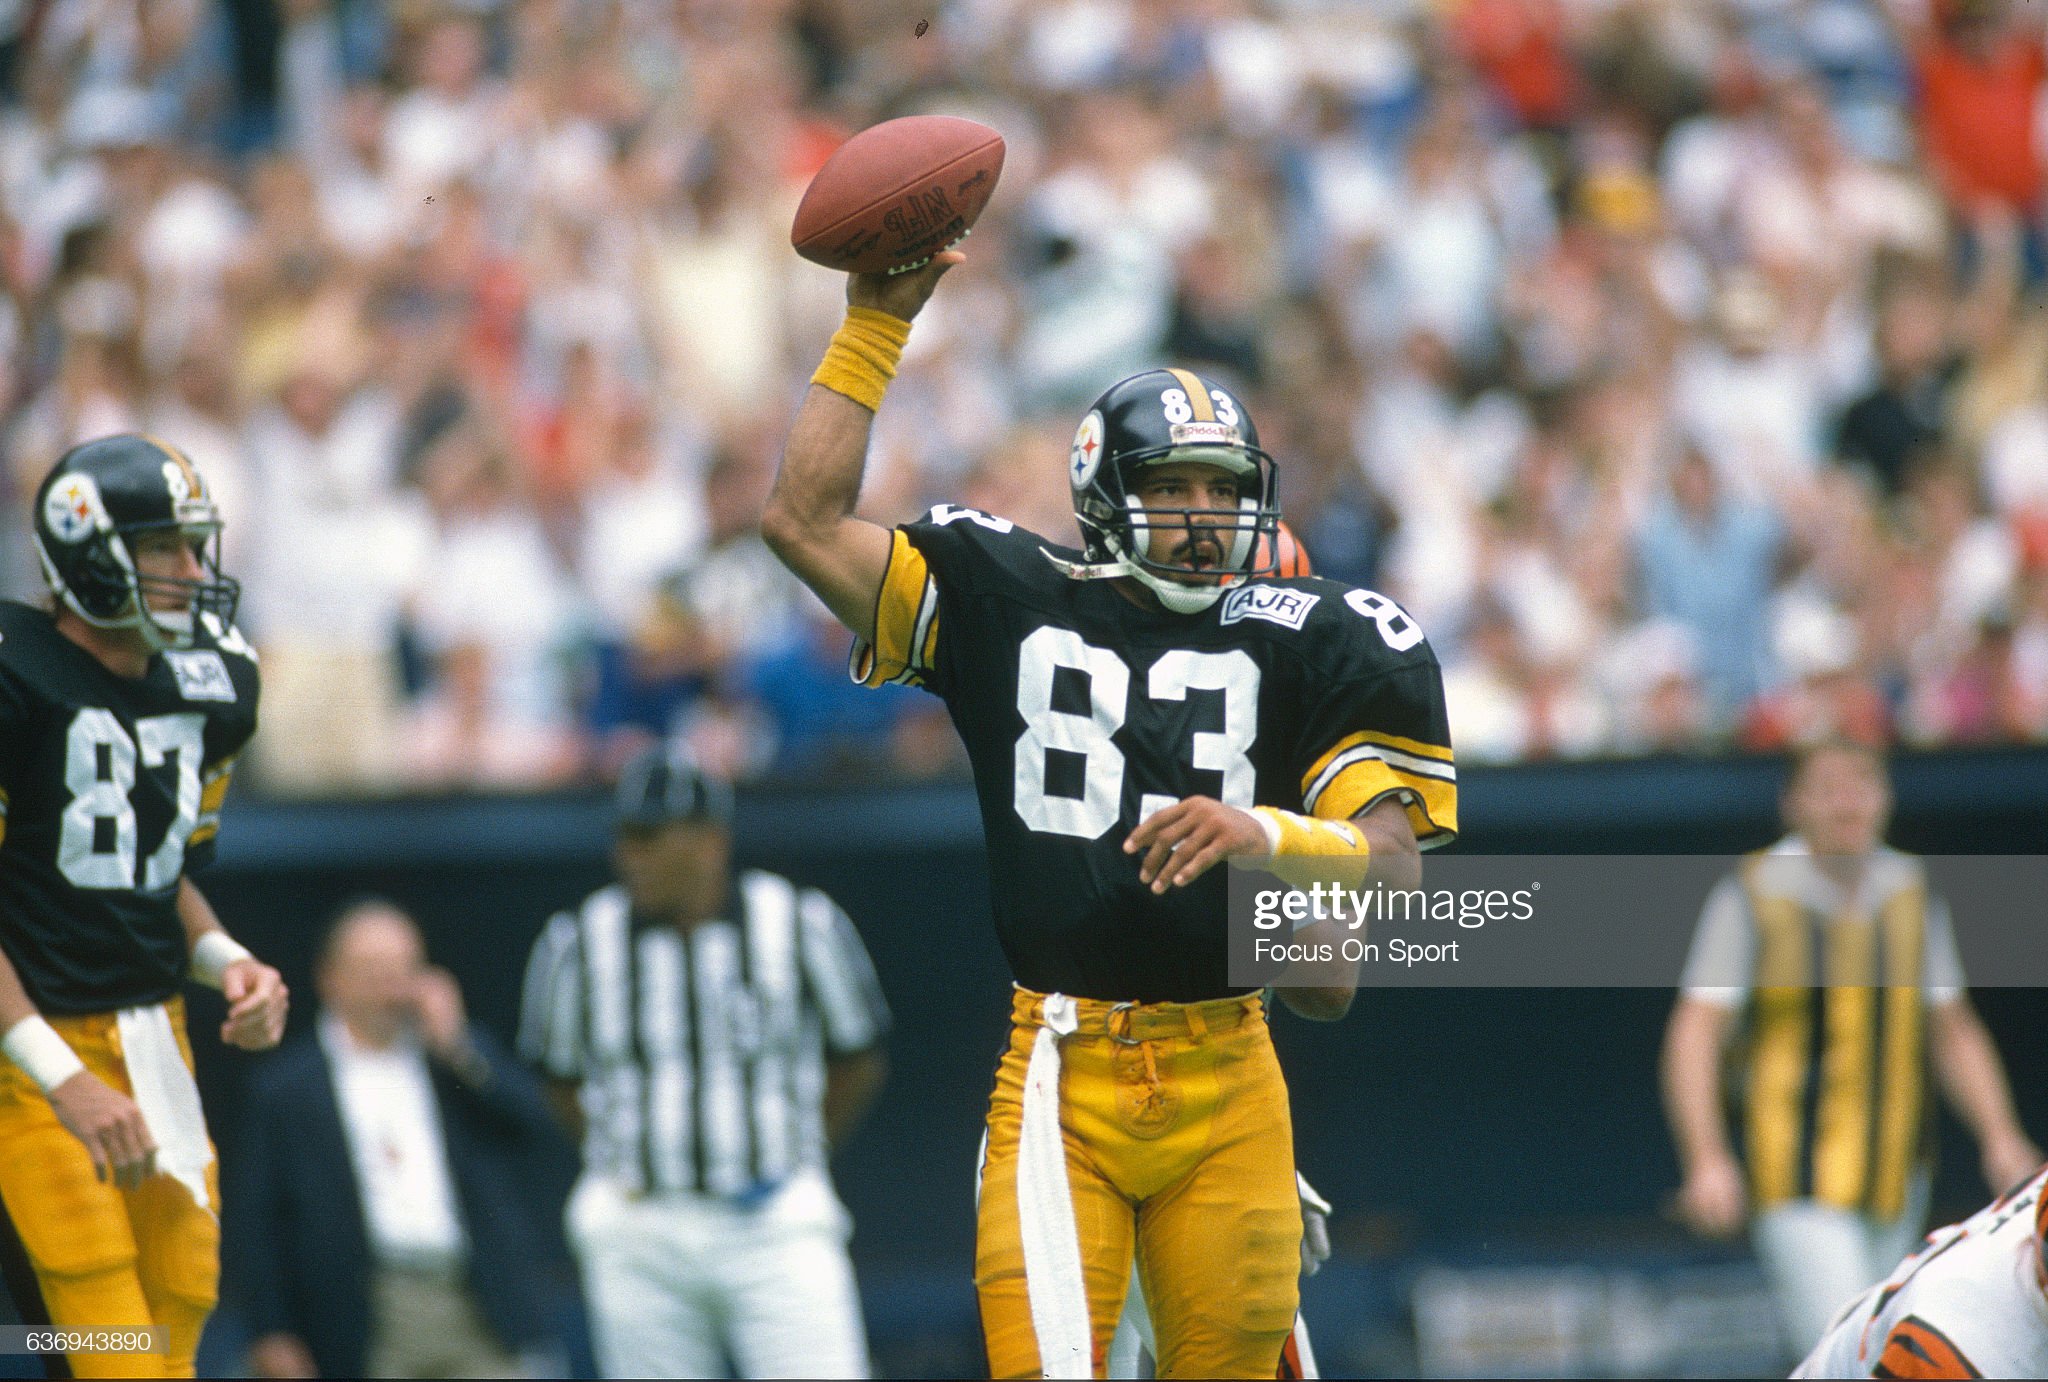 Ernie Holmes 1974 Pittsburgh Steelers Throwback NFL Football Jersey